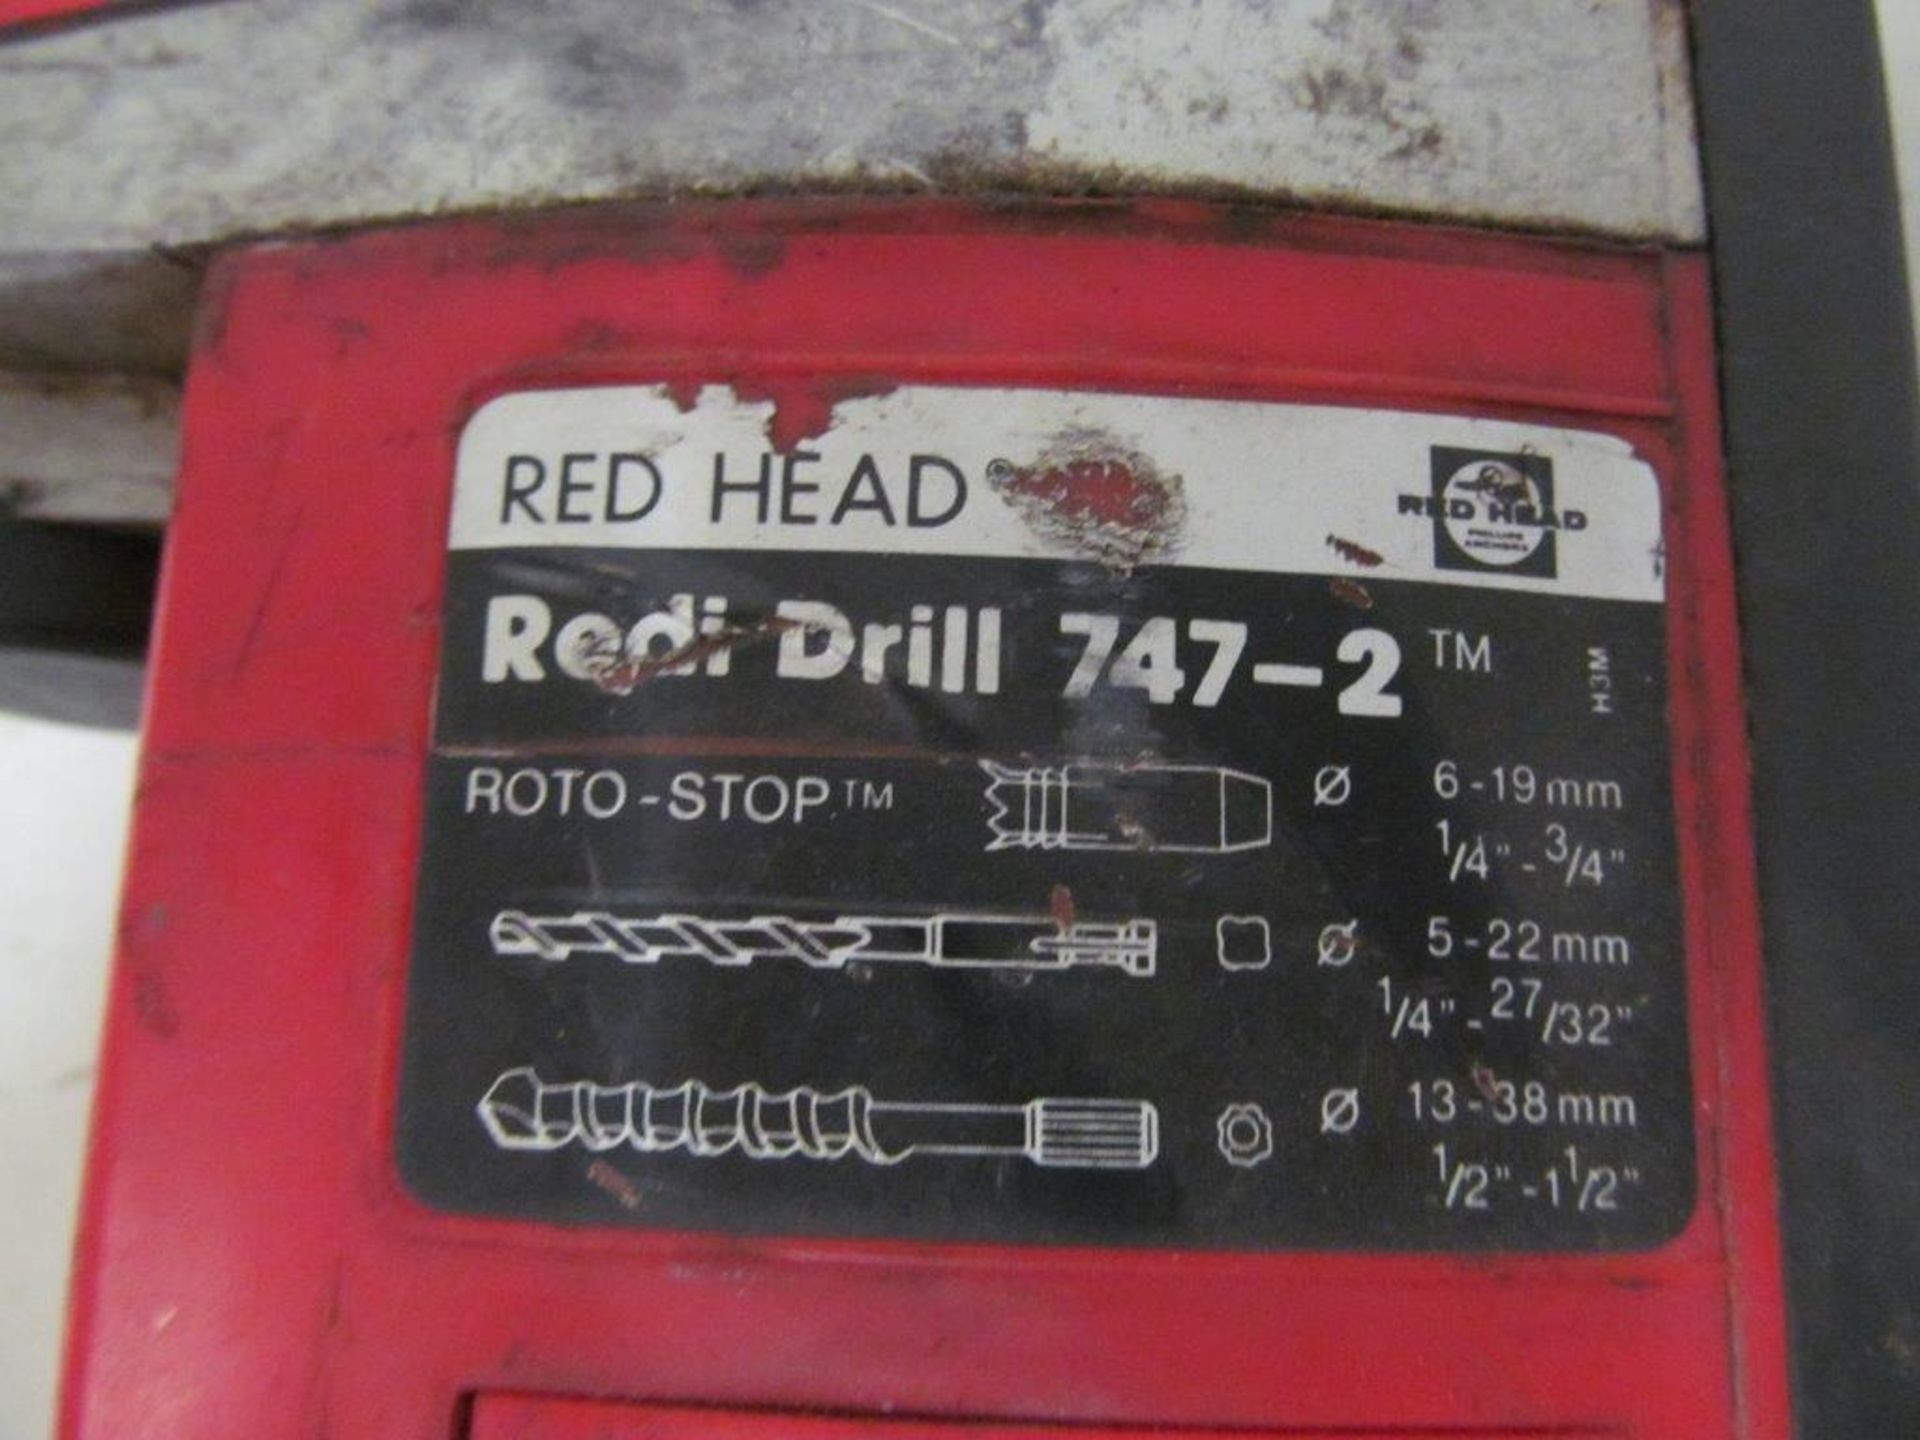 RED HEAD REDI DRILL 747-2 CEMENT DRILL, 110V/1PH/60C - LOCATION, HAWKESBURY, ONTARIO - Image 2 of 2